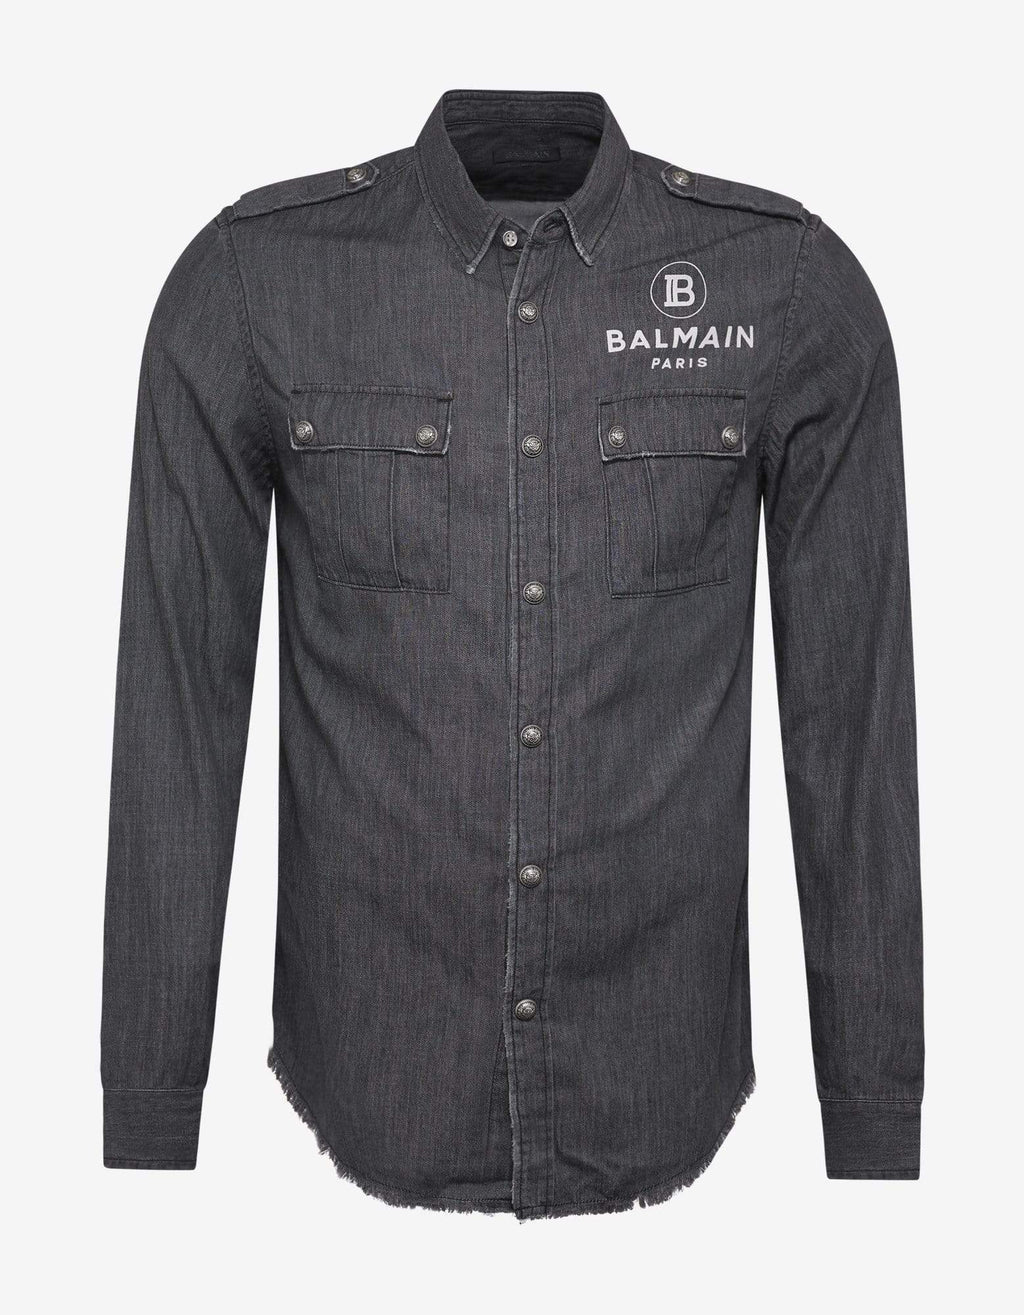 Balmain Balmain Grey Denim Logo Print Military Shirt